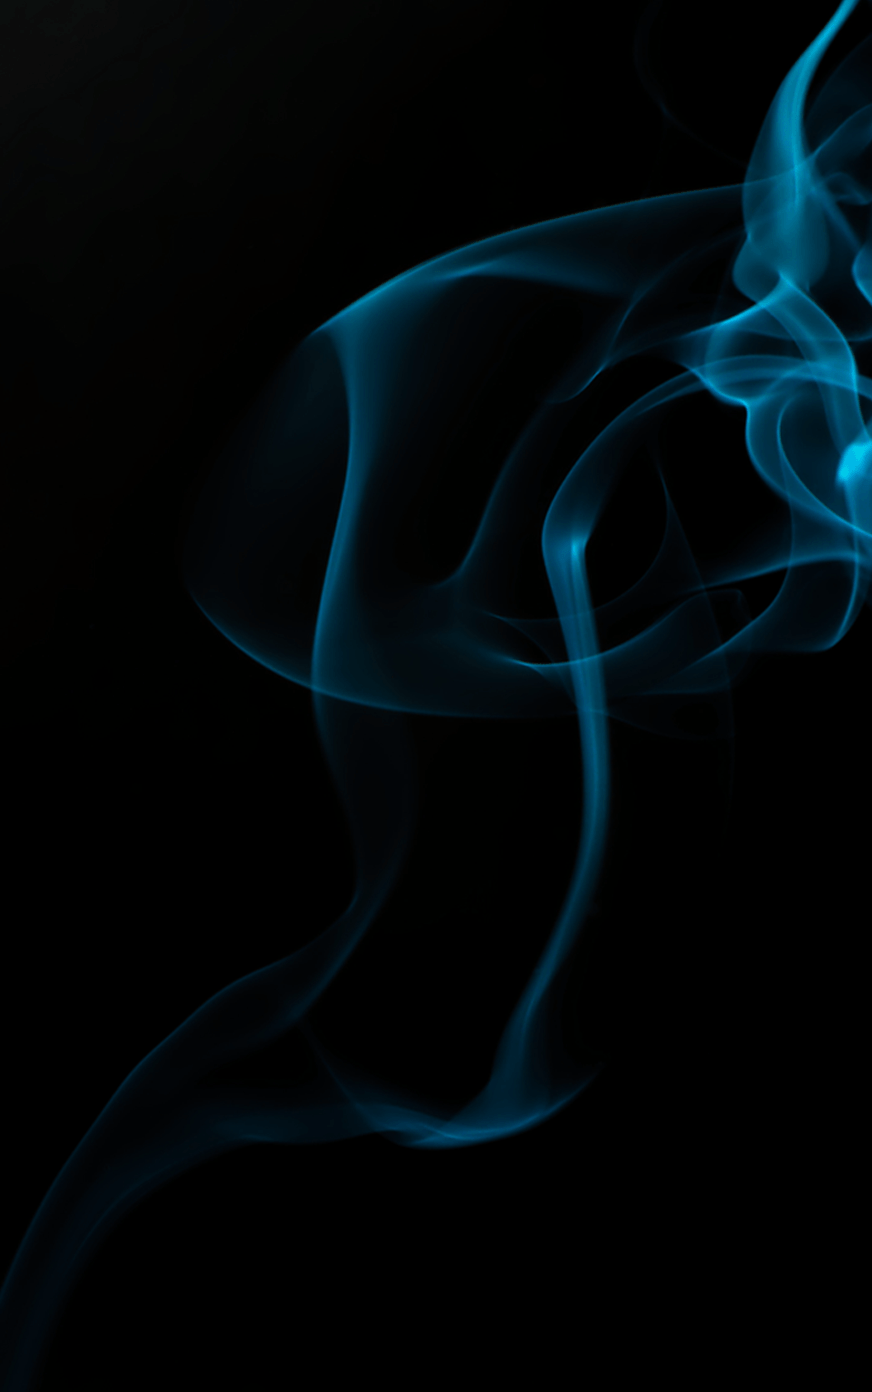 blue smoke against a black background